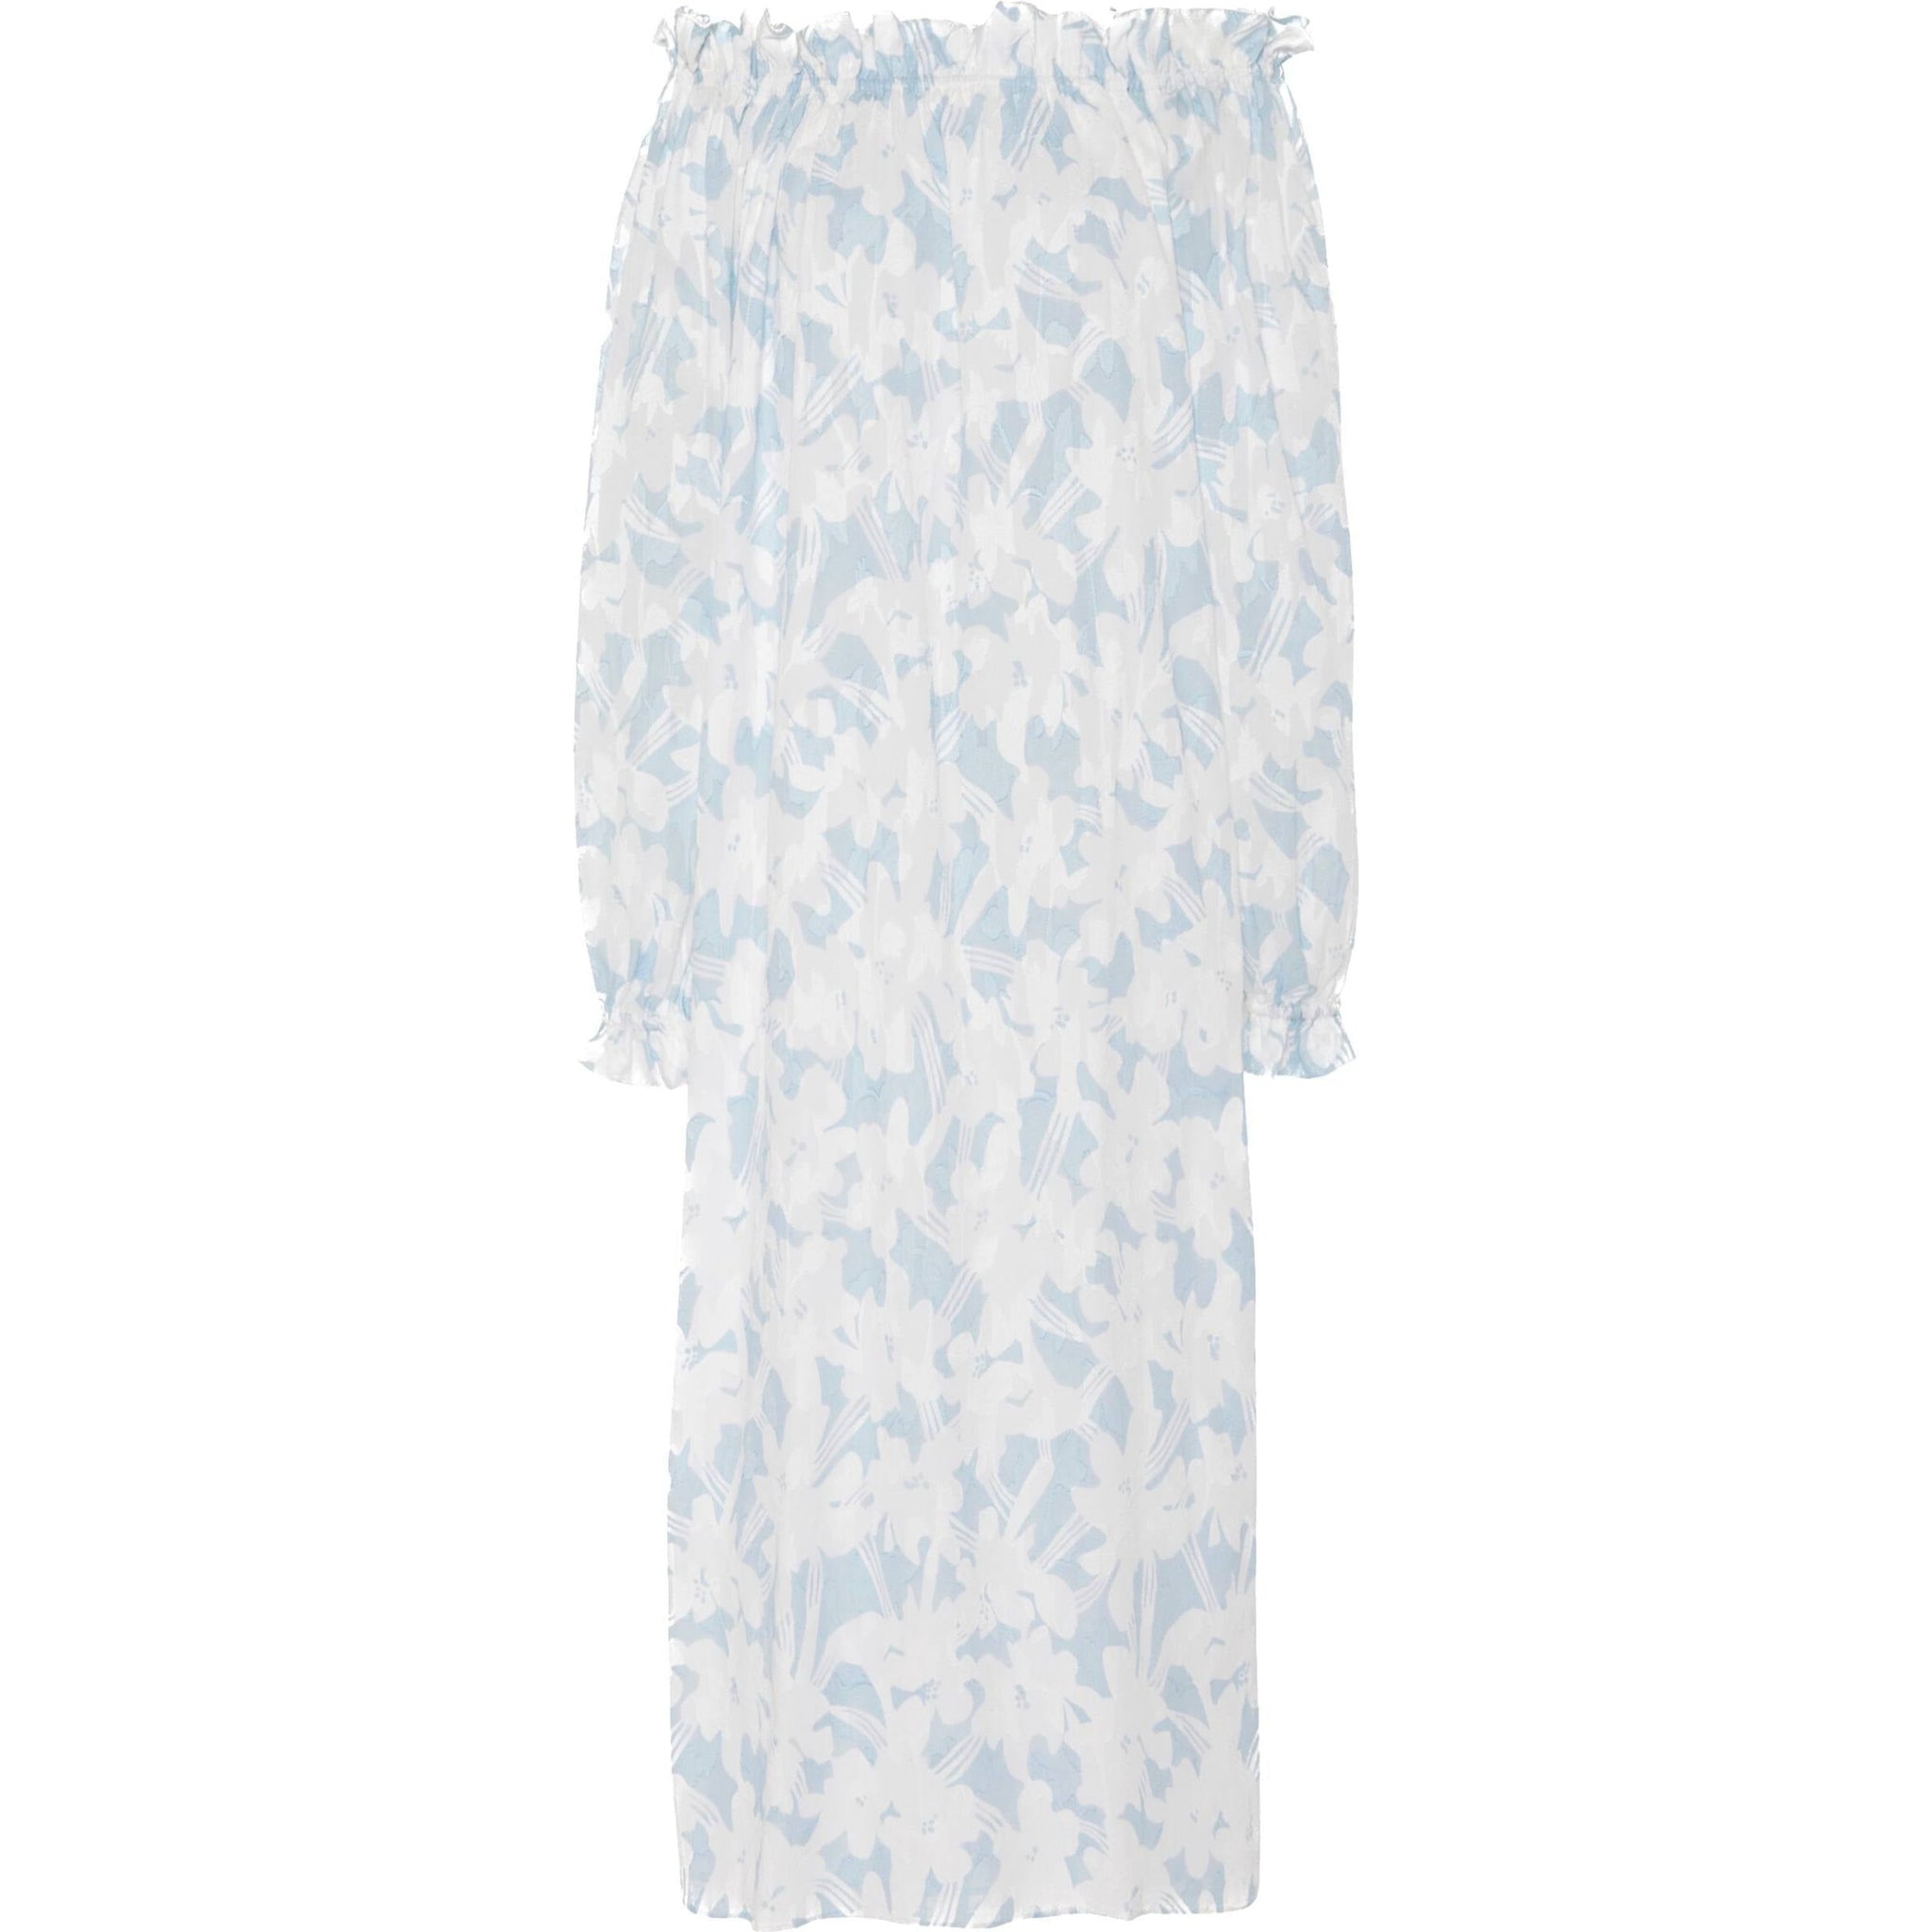 Women's Grace Dress in Pastel Blue & White Cotton Floral - Casey Marks